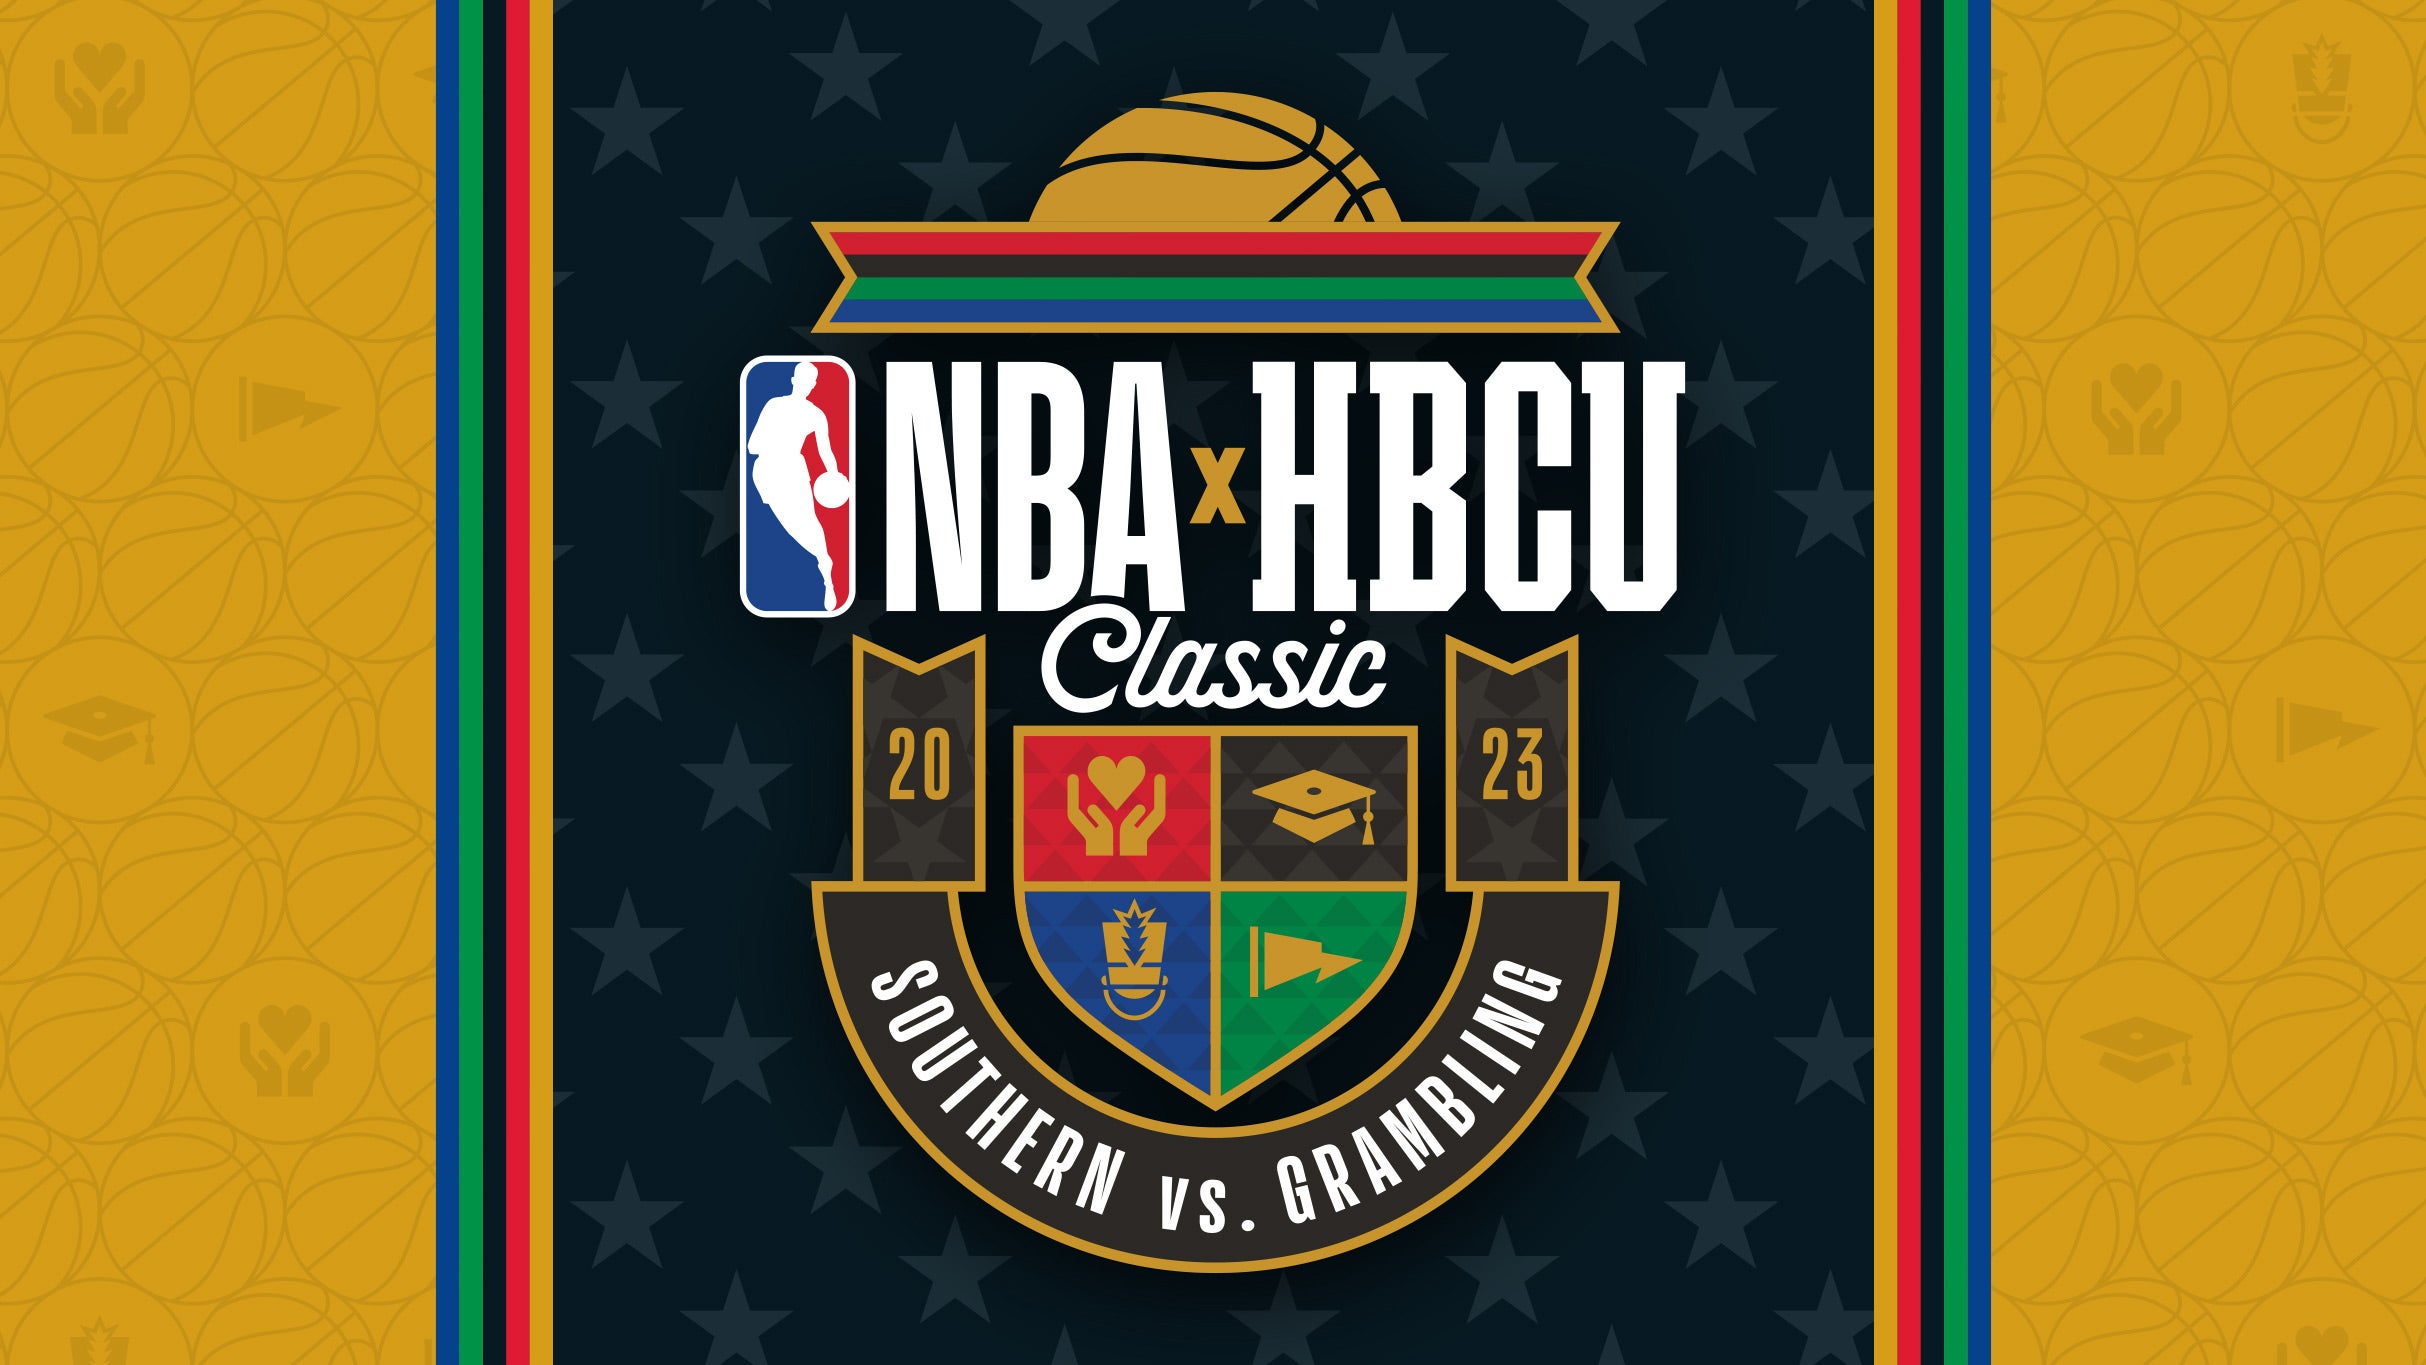 NBA HBCU Classic Game presale information on freepresalepasswords.com